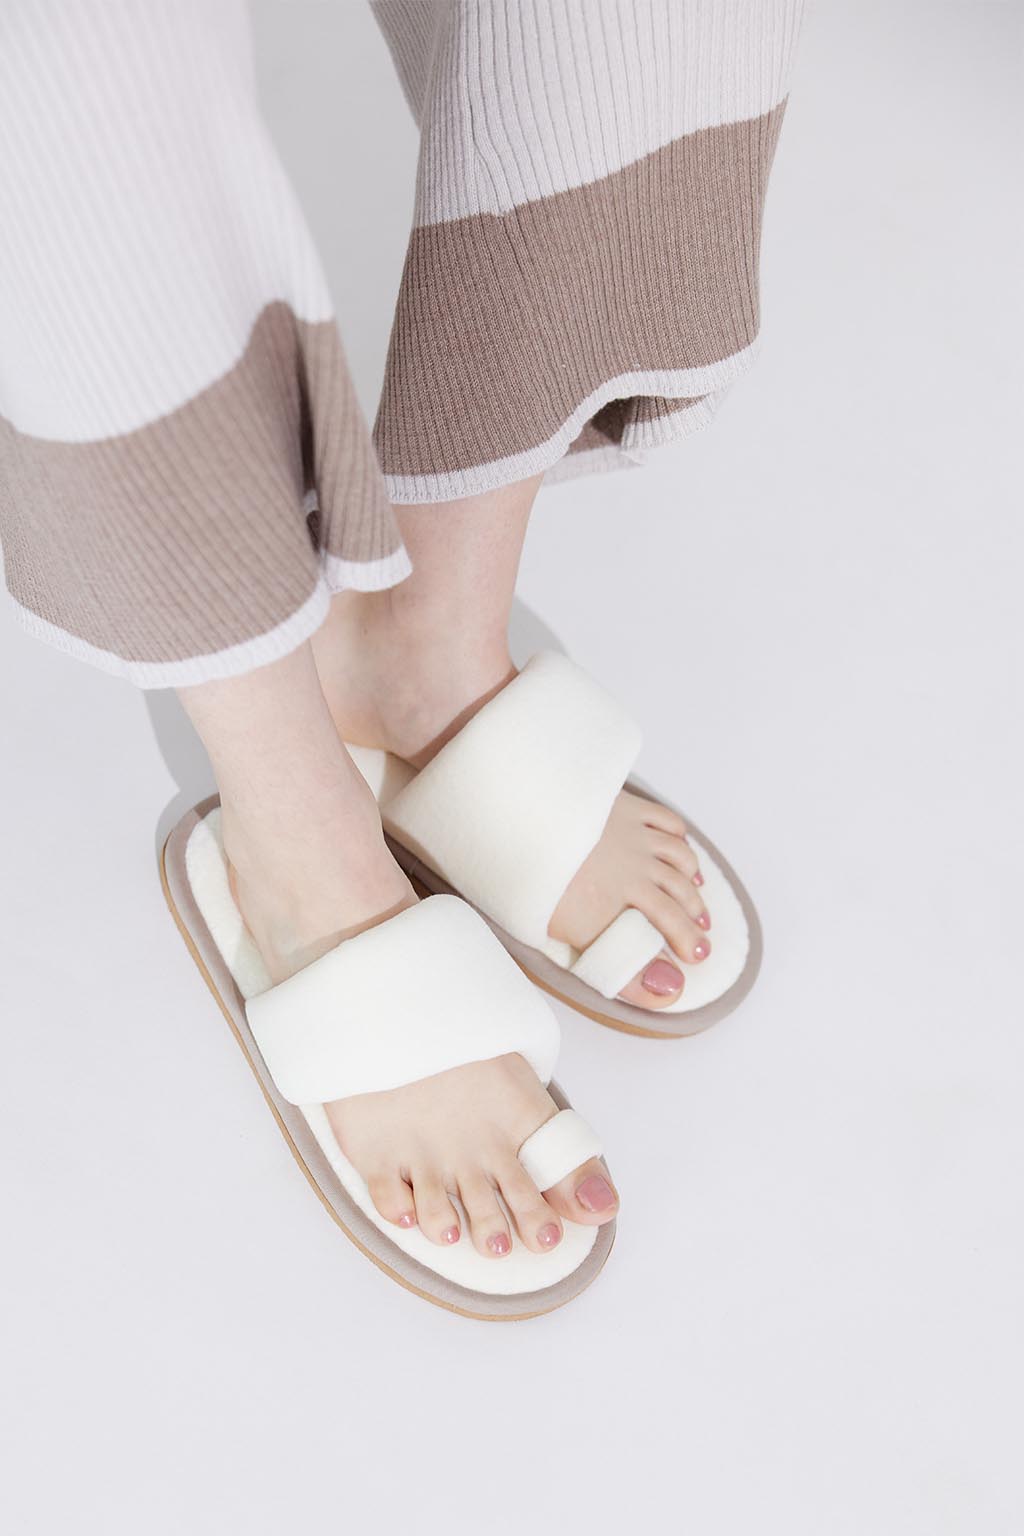 toe-ring-cushion-slippers-01